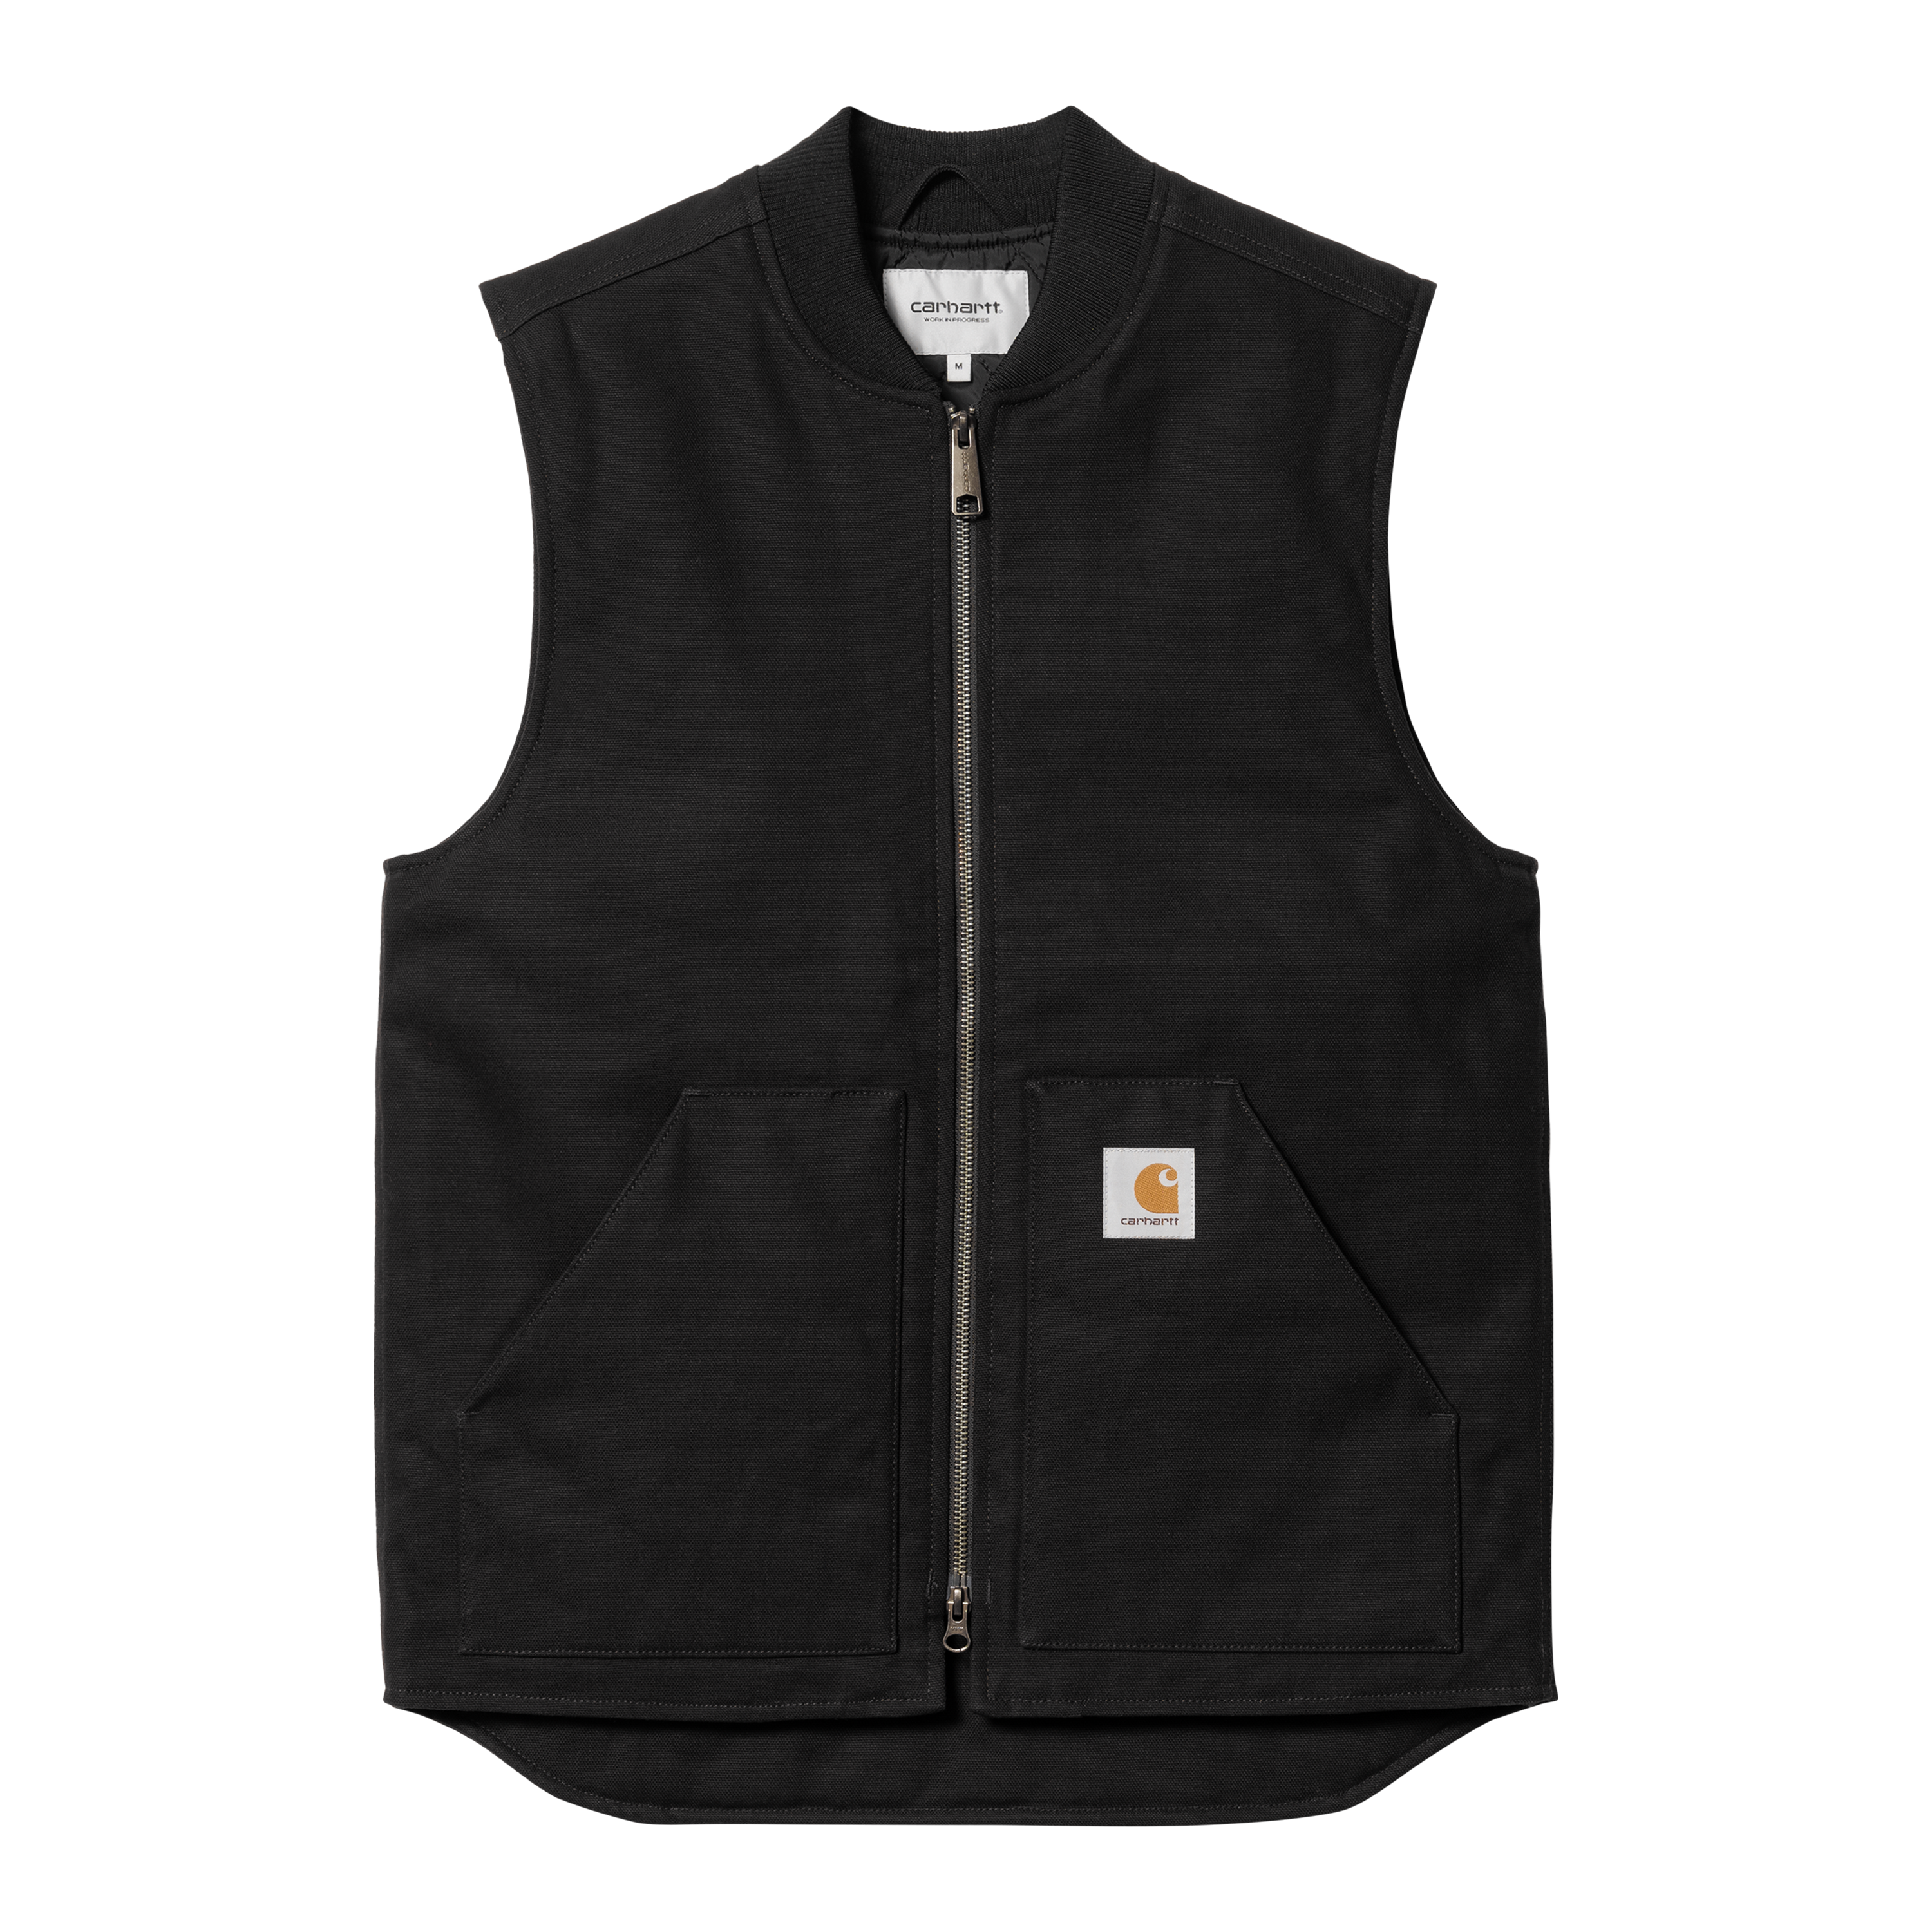 Carhartt WIP Jackets & Vests Winter Jackets | Carhartt WIP